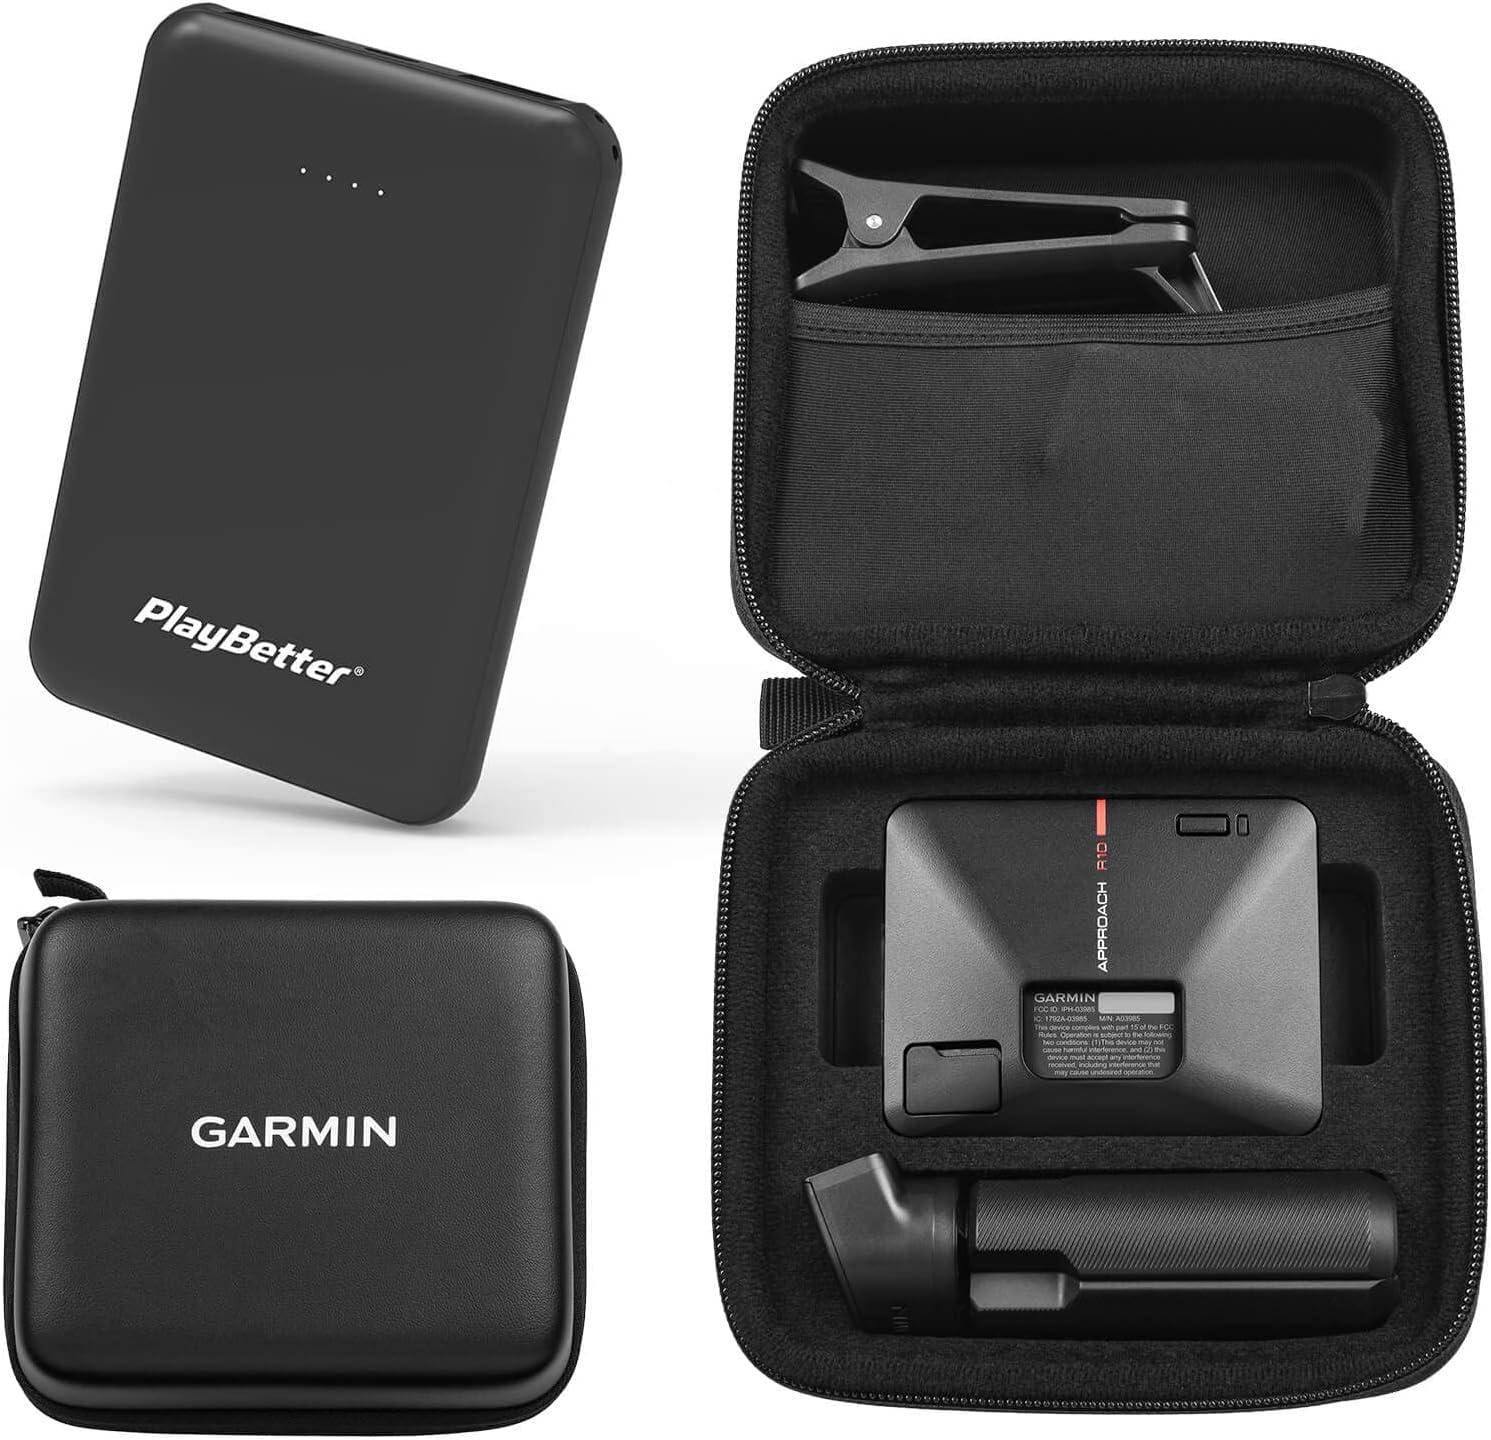 Garmin Approach® R10 Portable Golf Launch Monitor & Indoor